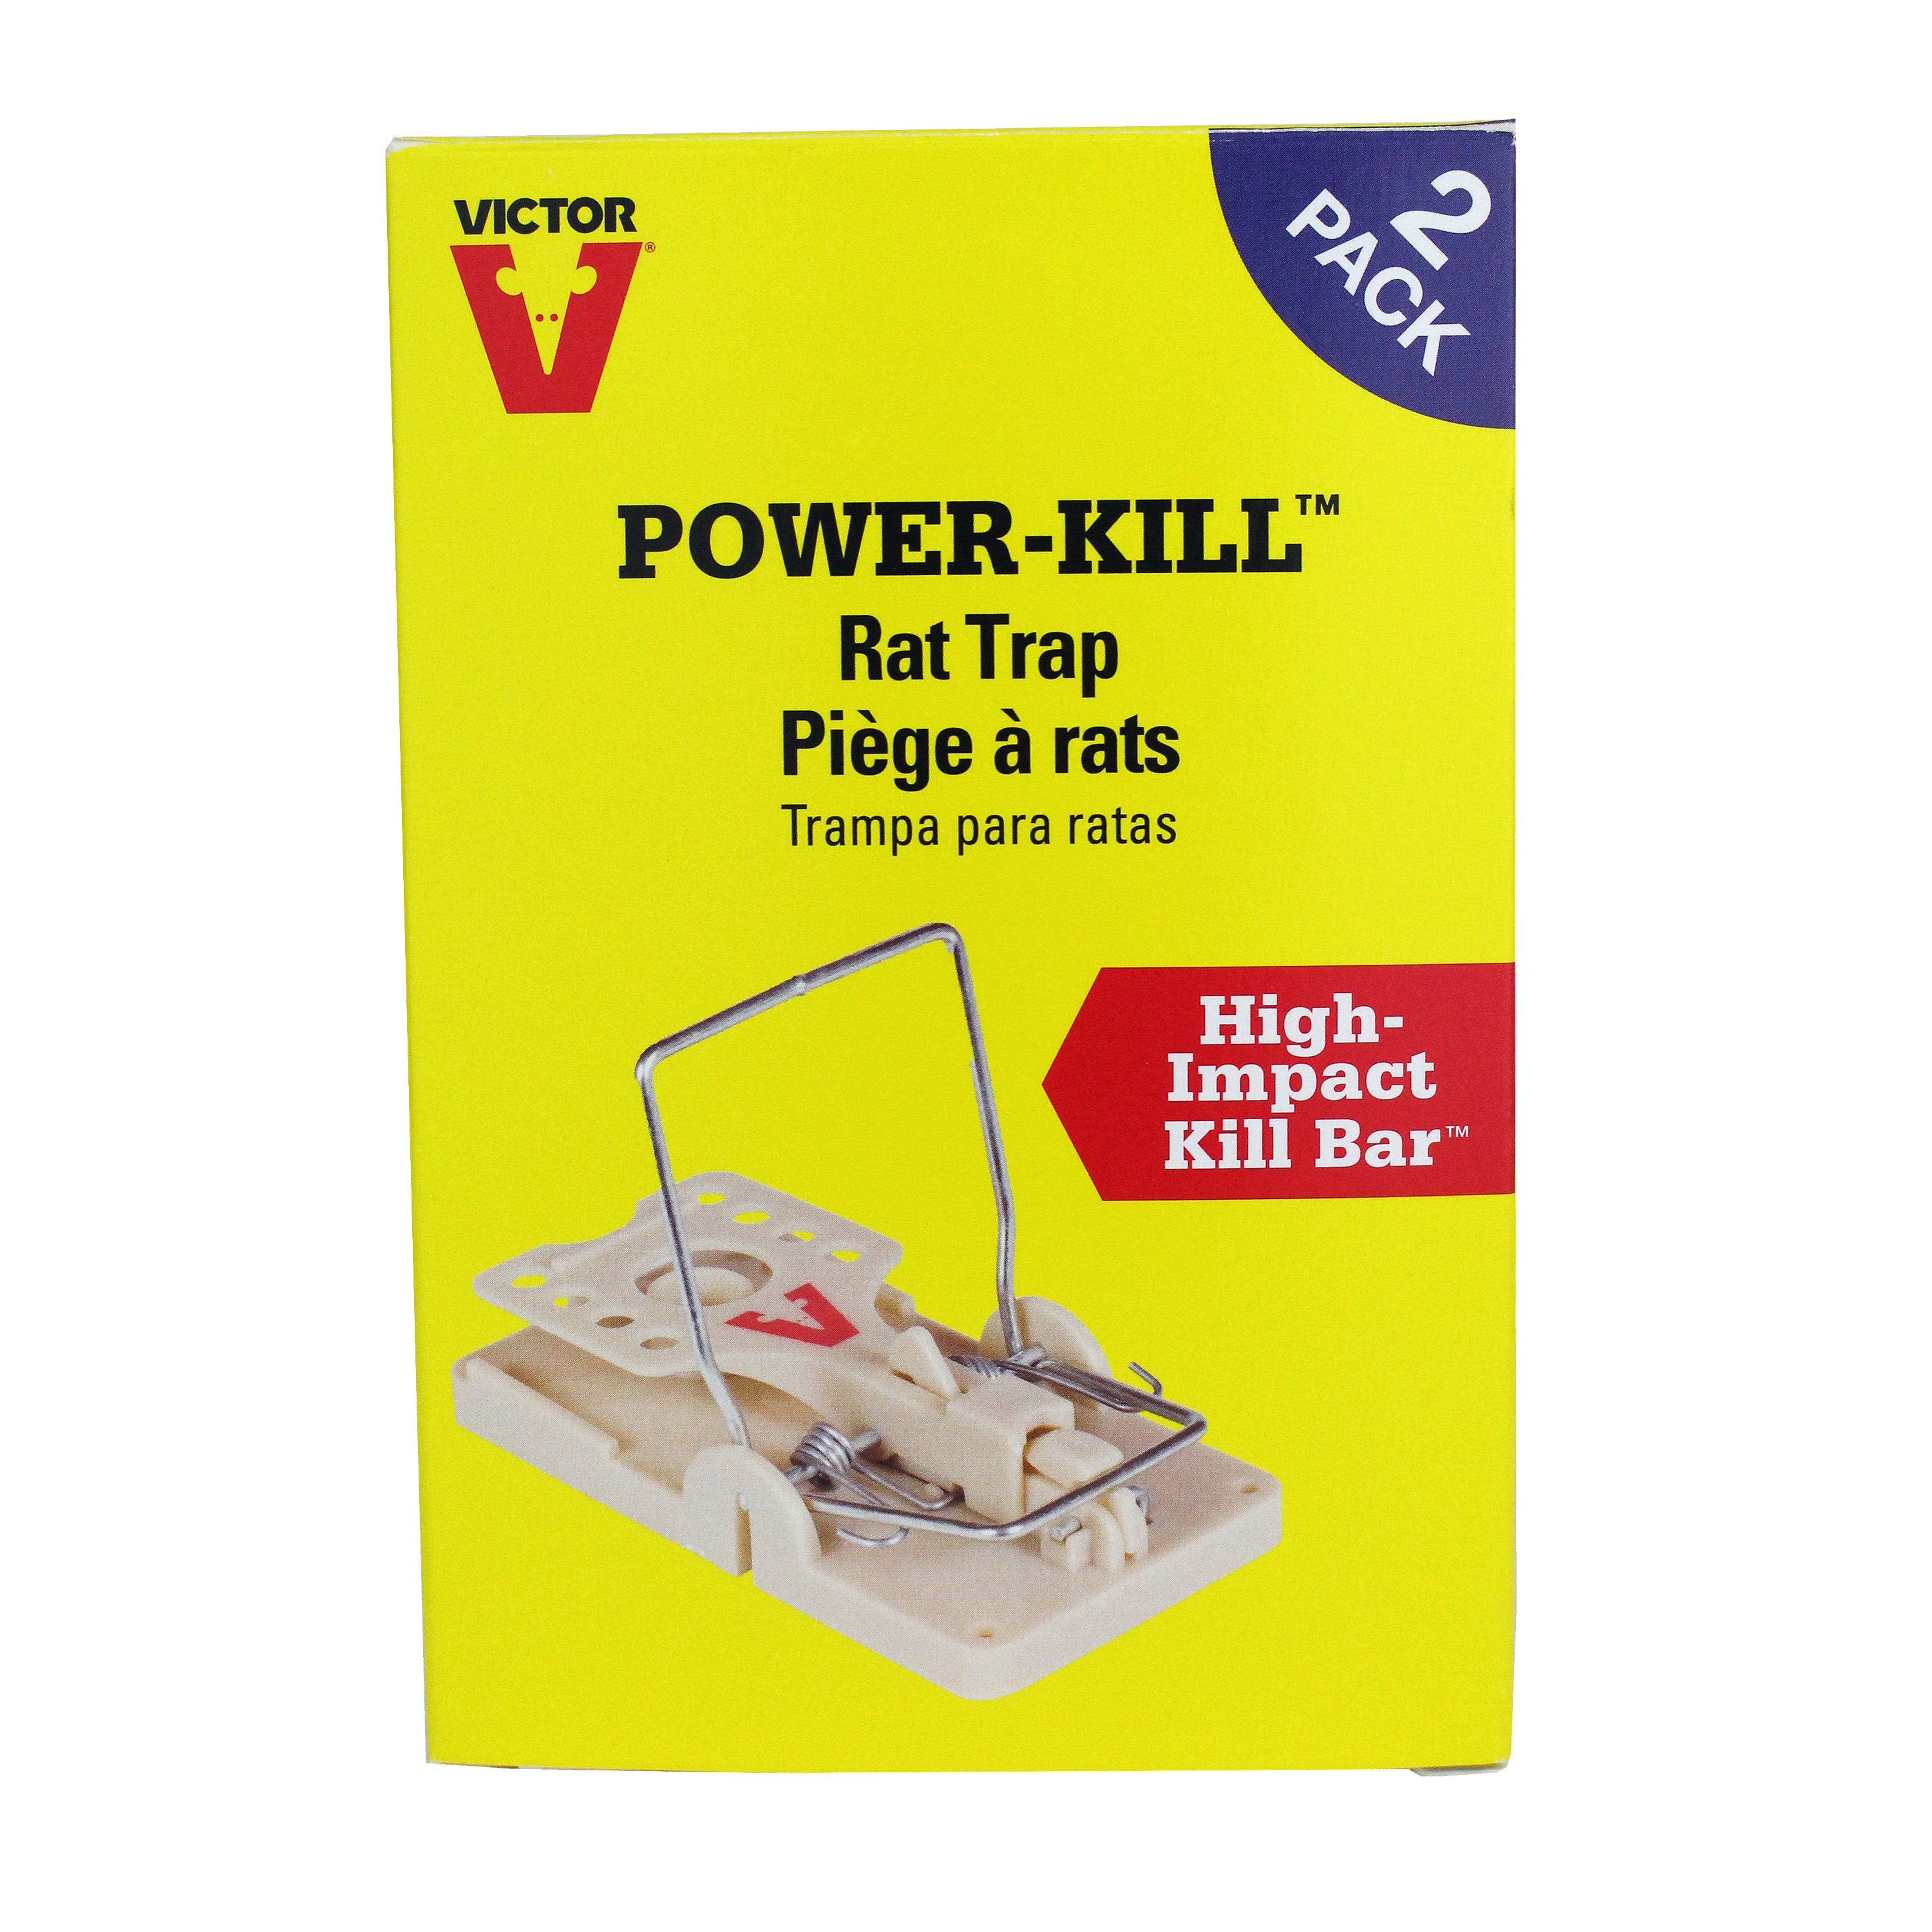 Victor Power Kill Rat Trap M144 - Professional Design 4 Pack